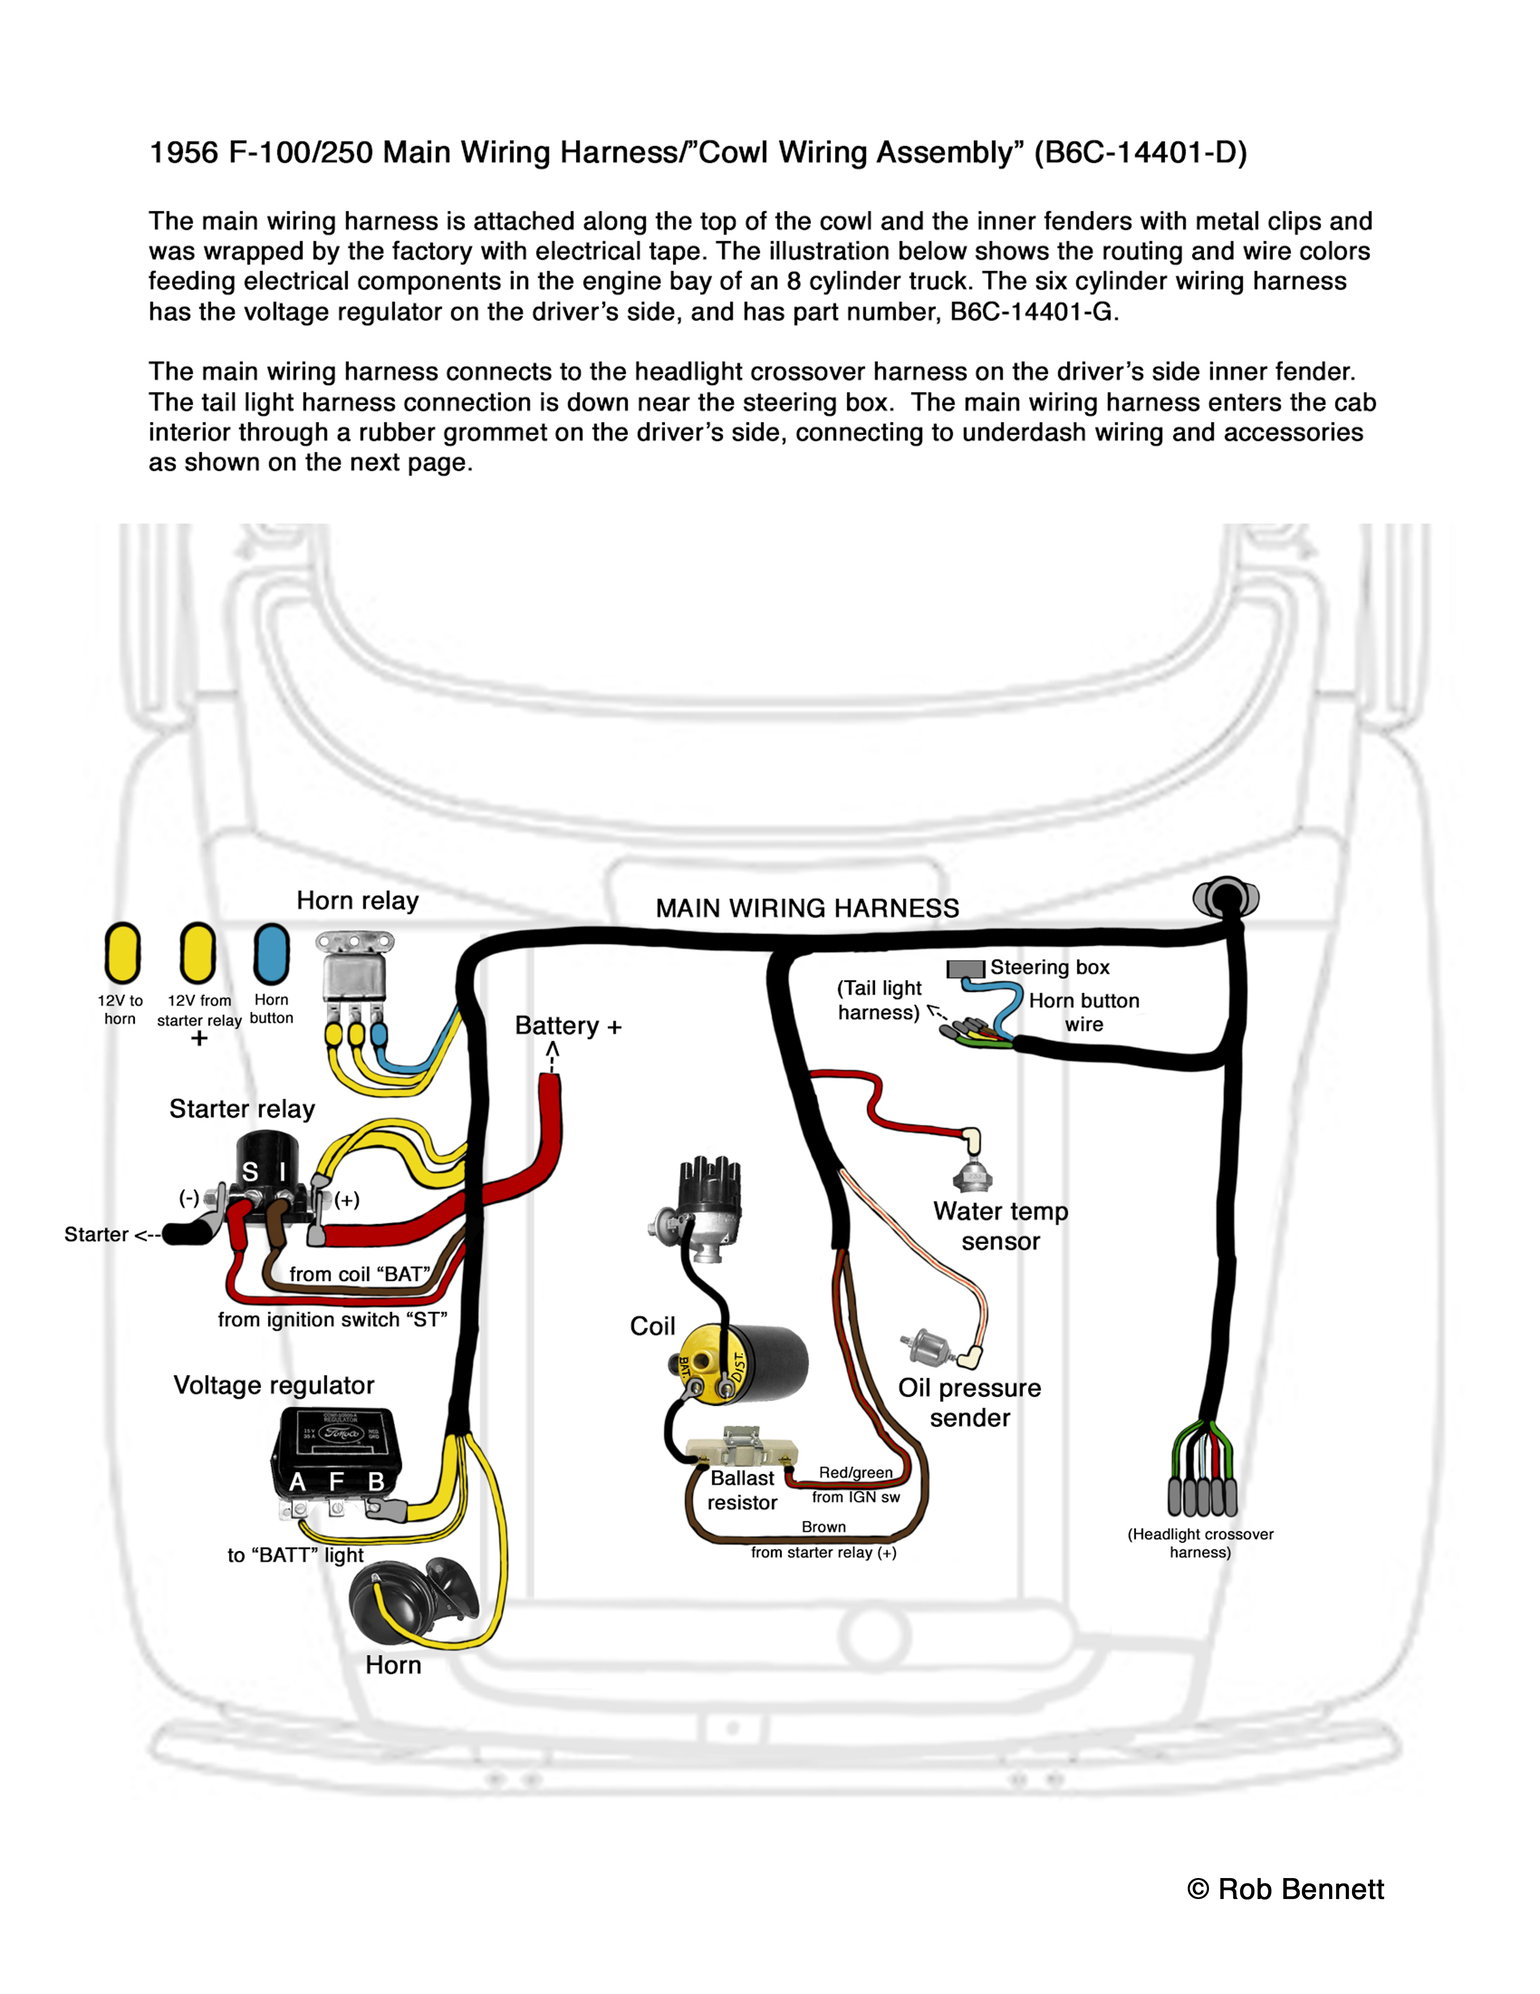 1956 Ford Headlight Switch Wiring Diagram from cimg1.ibsrv.net